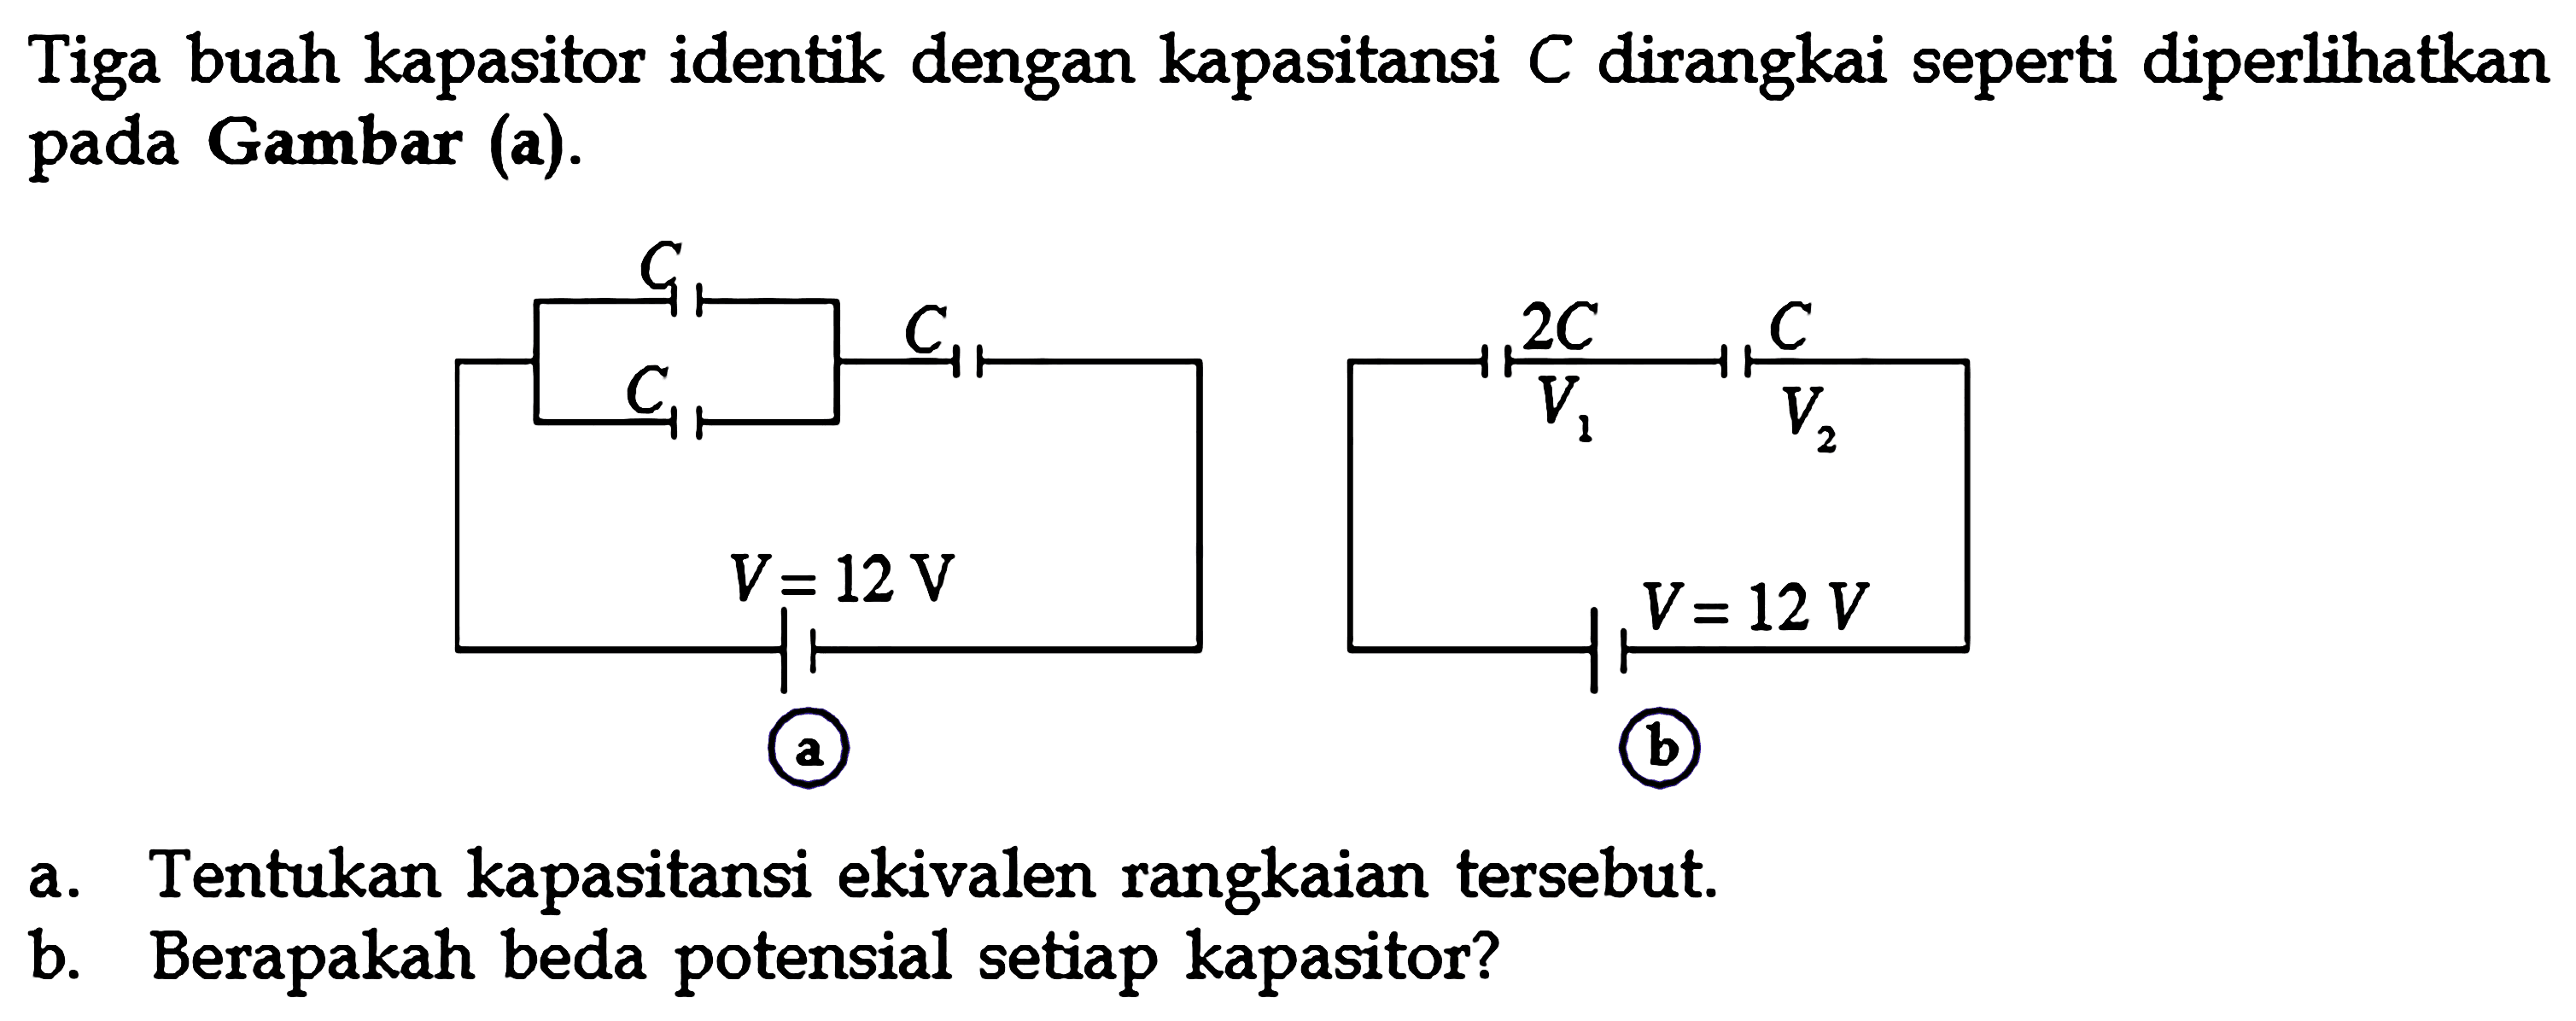 Tiga buah kapasitor identik dengan kapasitansi C dirangkai seperti diperlihatkan pada Gambar (a). a. Tentukan kapasitansi ekivalen rangkaian tersebut b. Berapakah beda potensial setiap kapasitor?